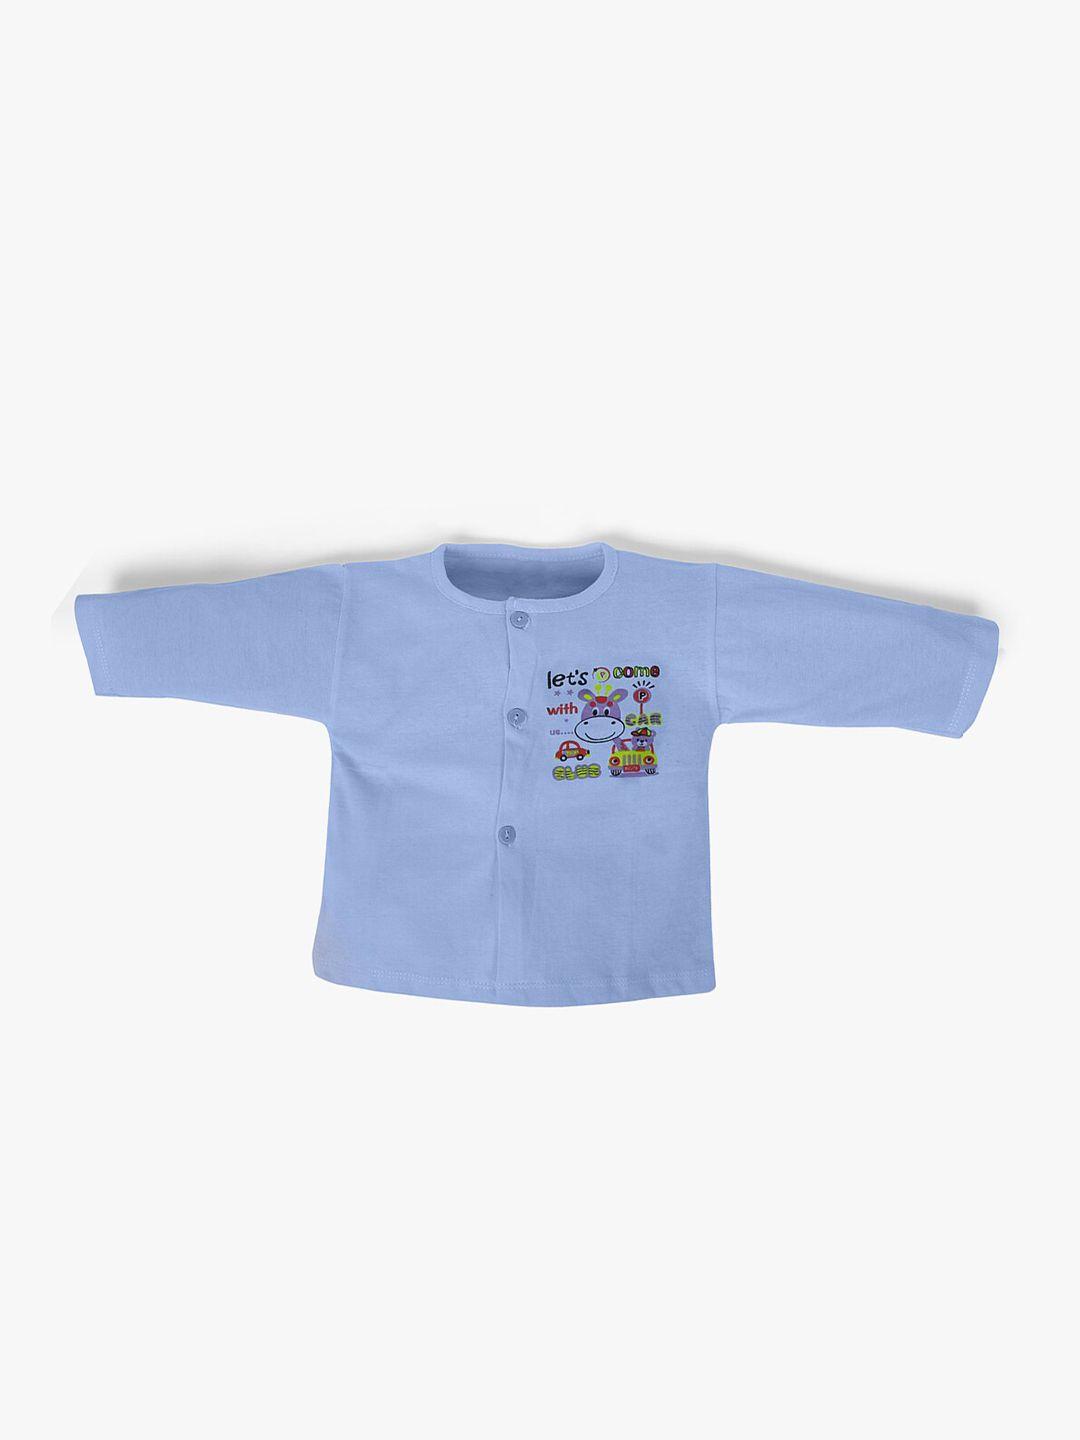 pokory unisex kids blue pure cotton printed t-shirt